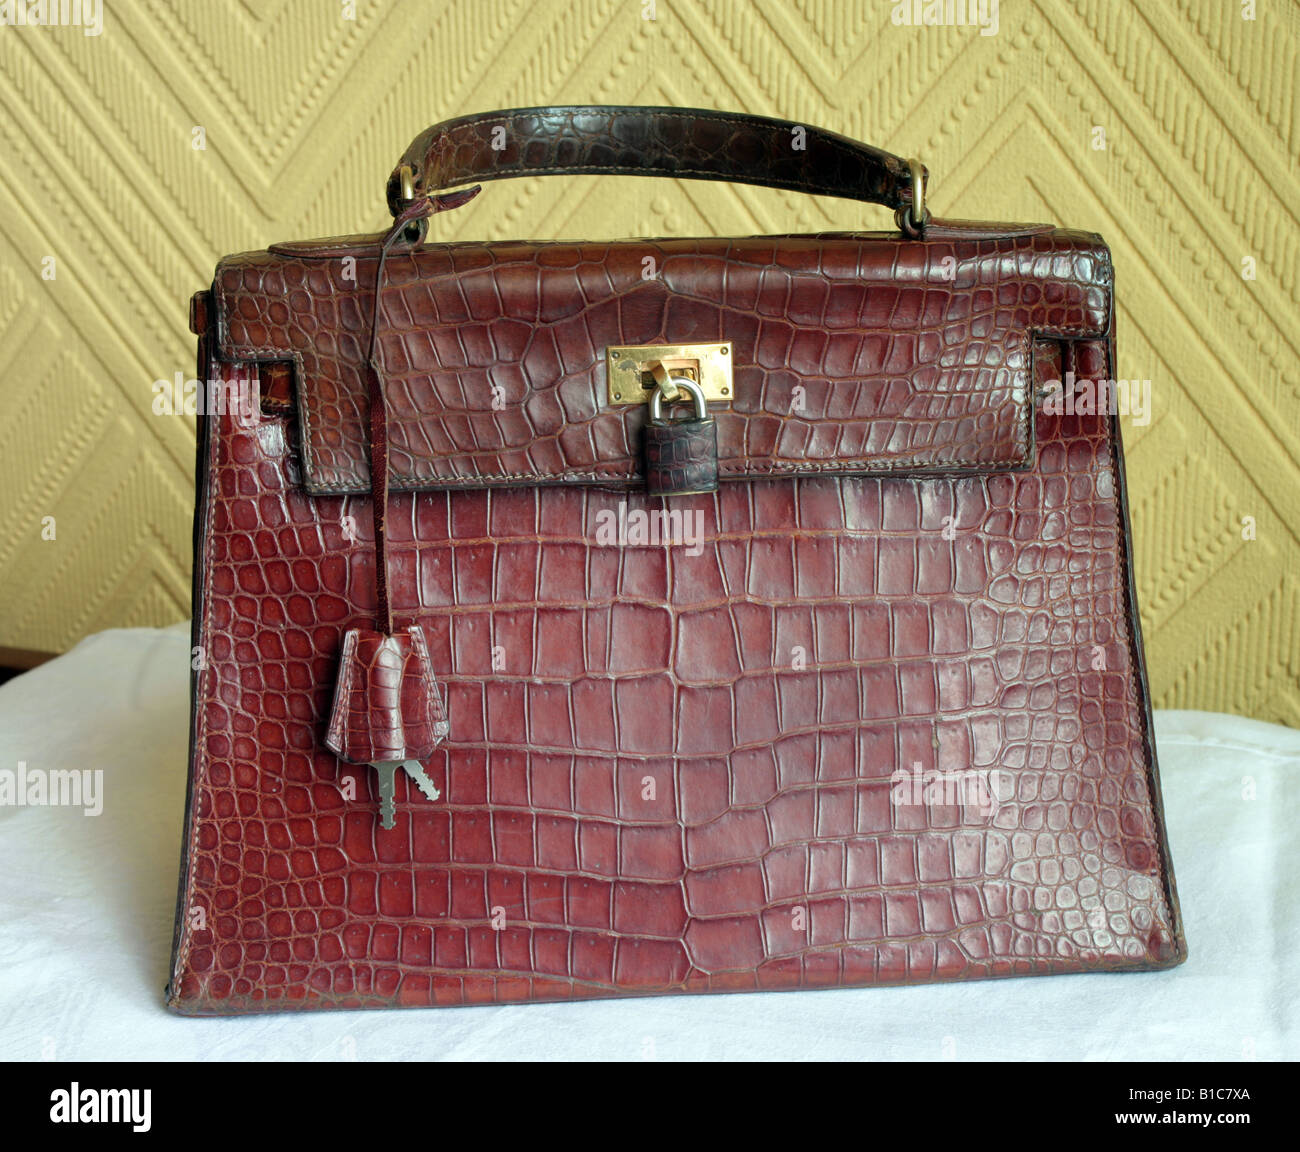 Hermès Kelly 35 Leather Handbag